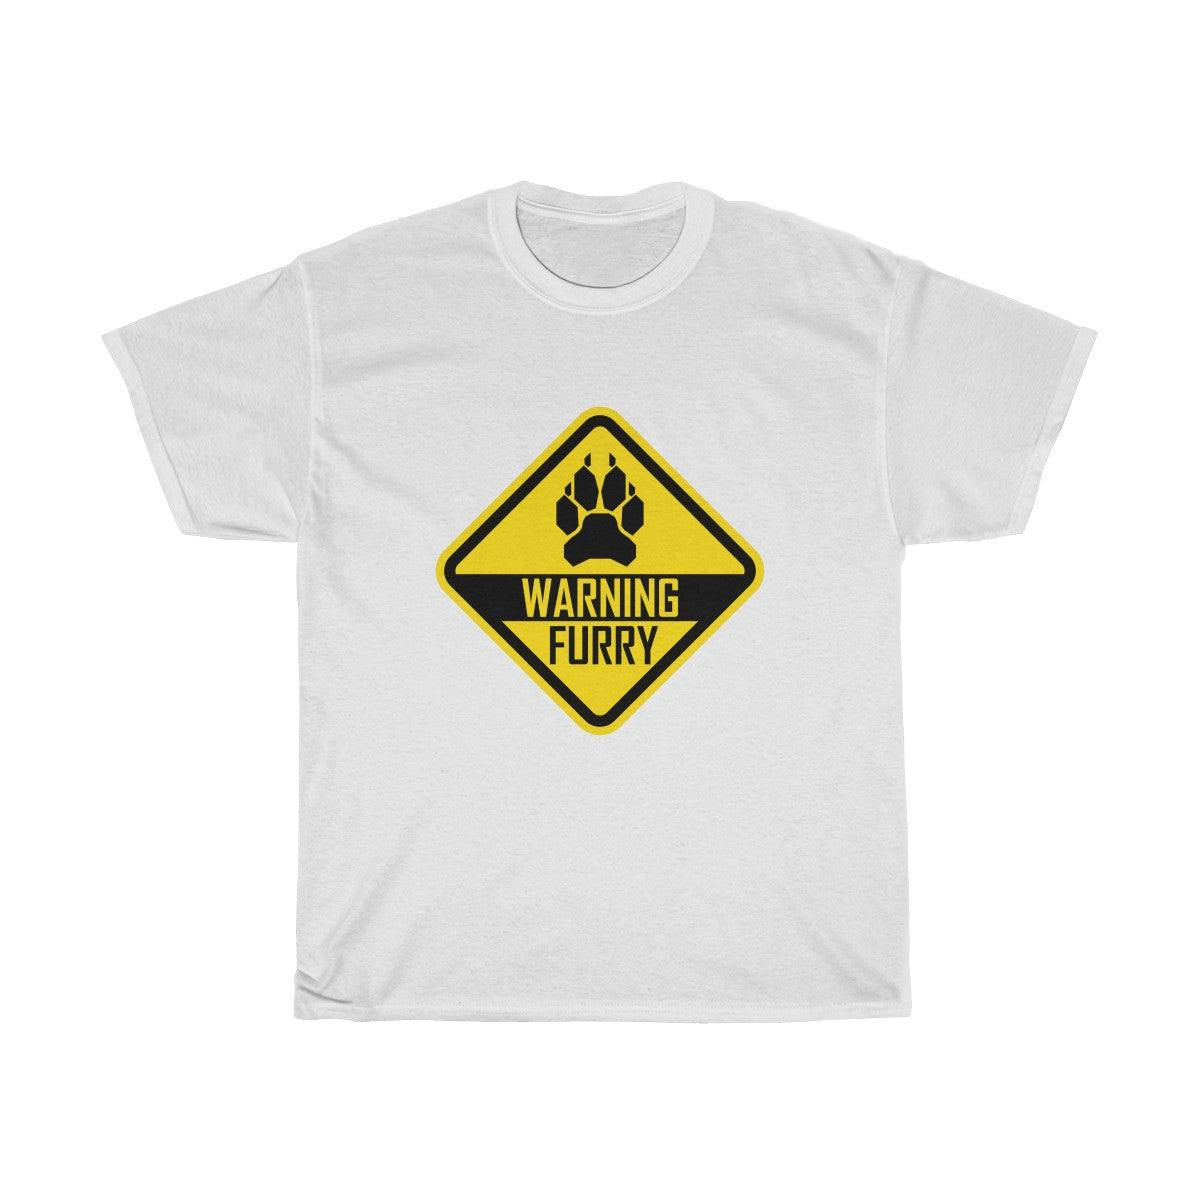 Warning Canine - T-Shirt T-Shirt Wexon White S 